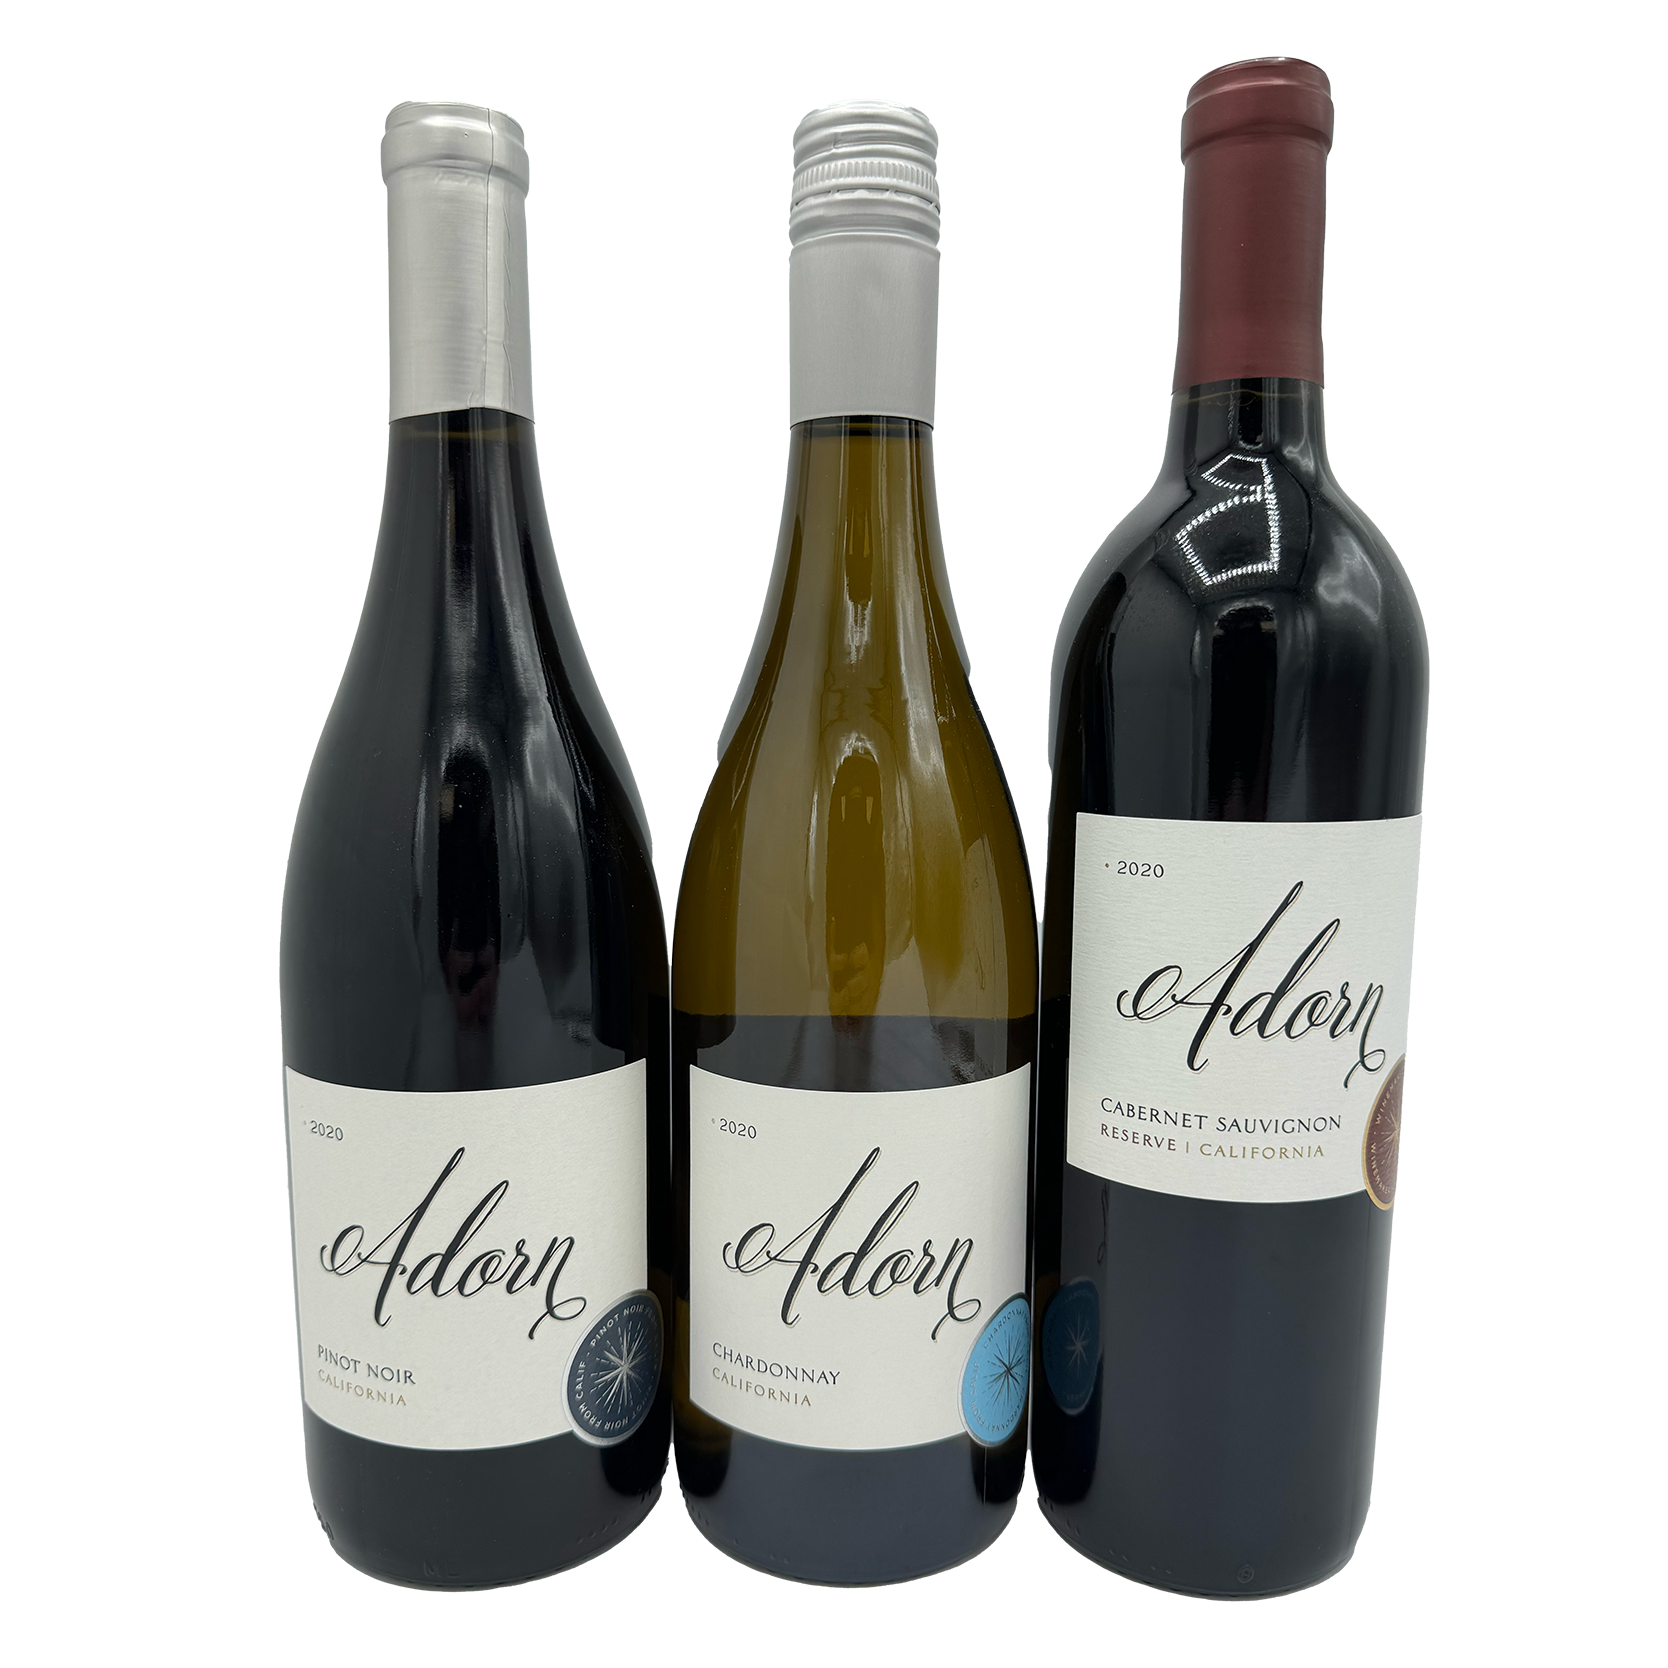 Aldorn Wine